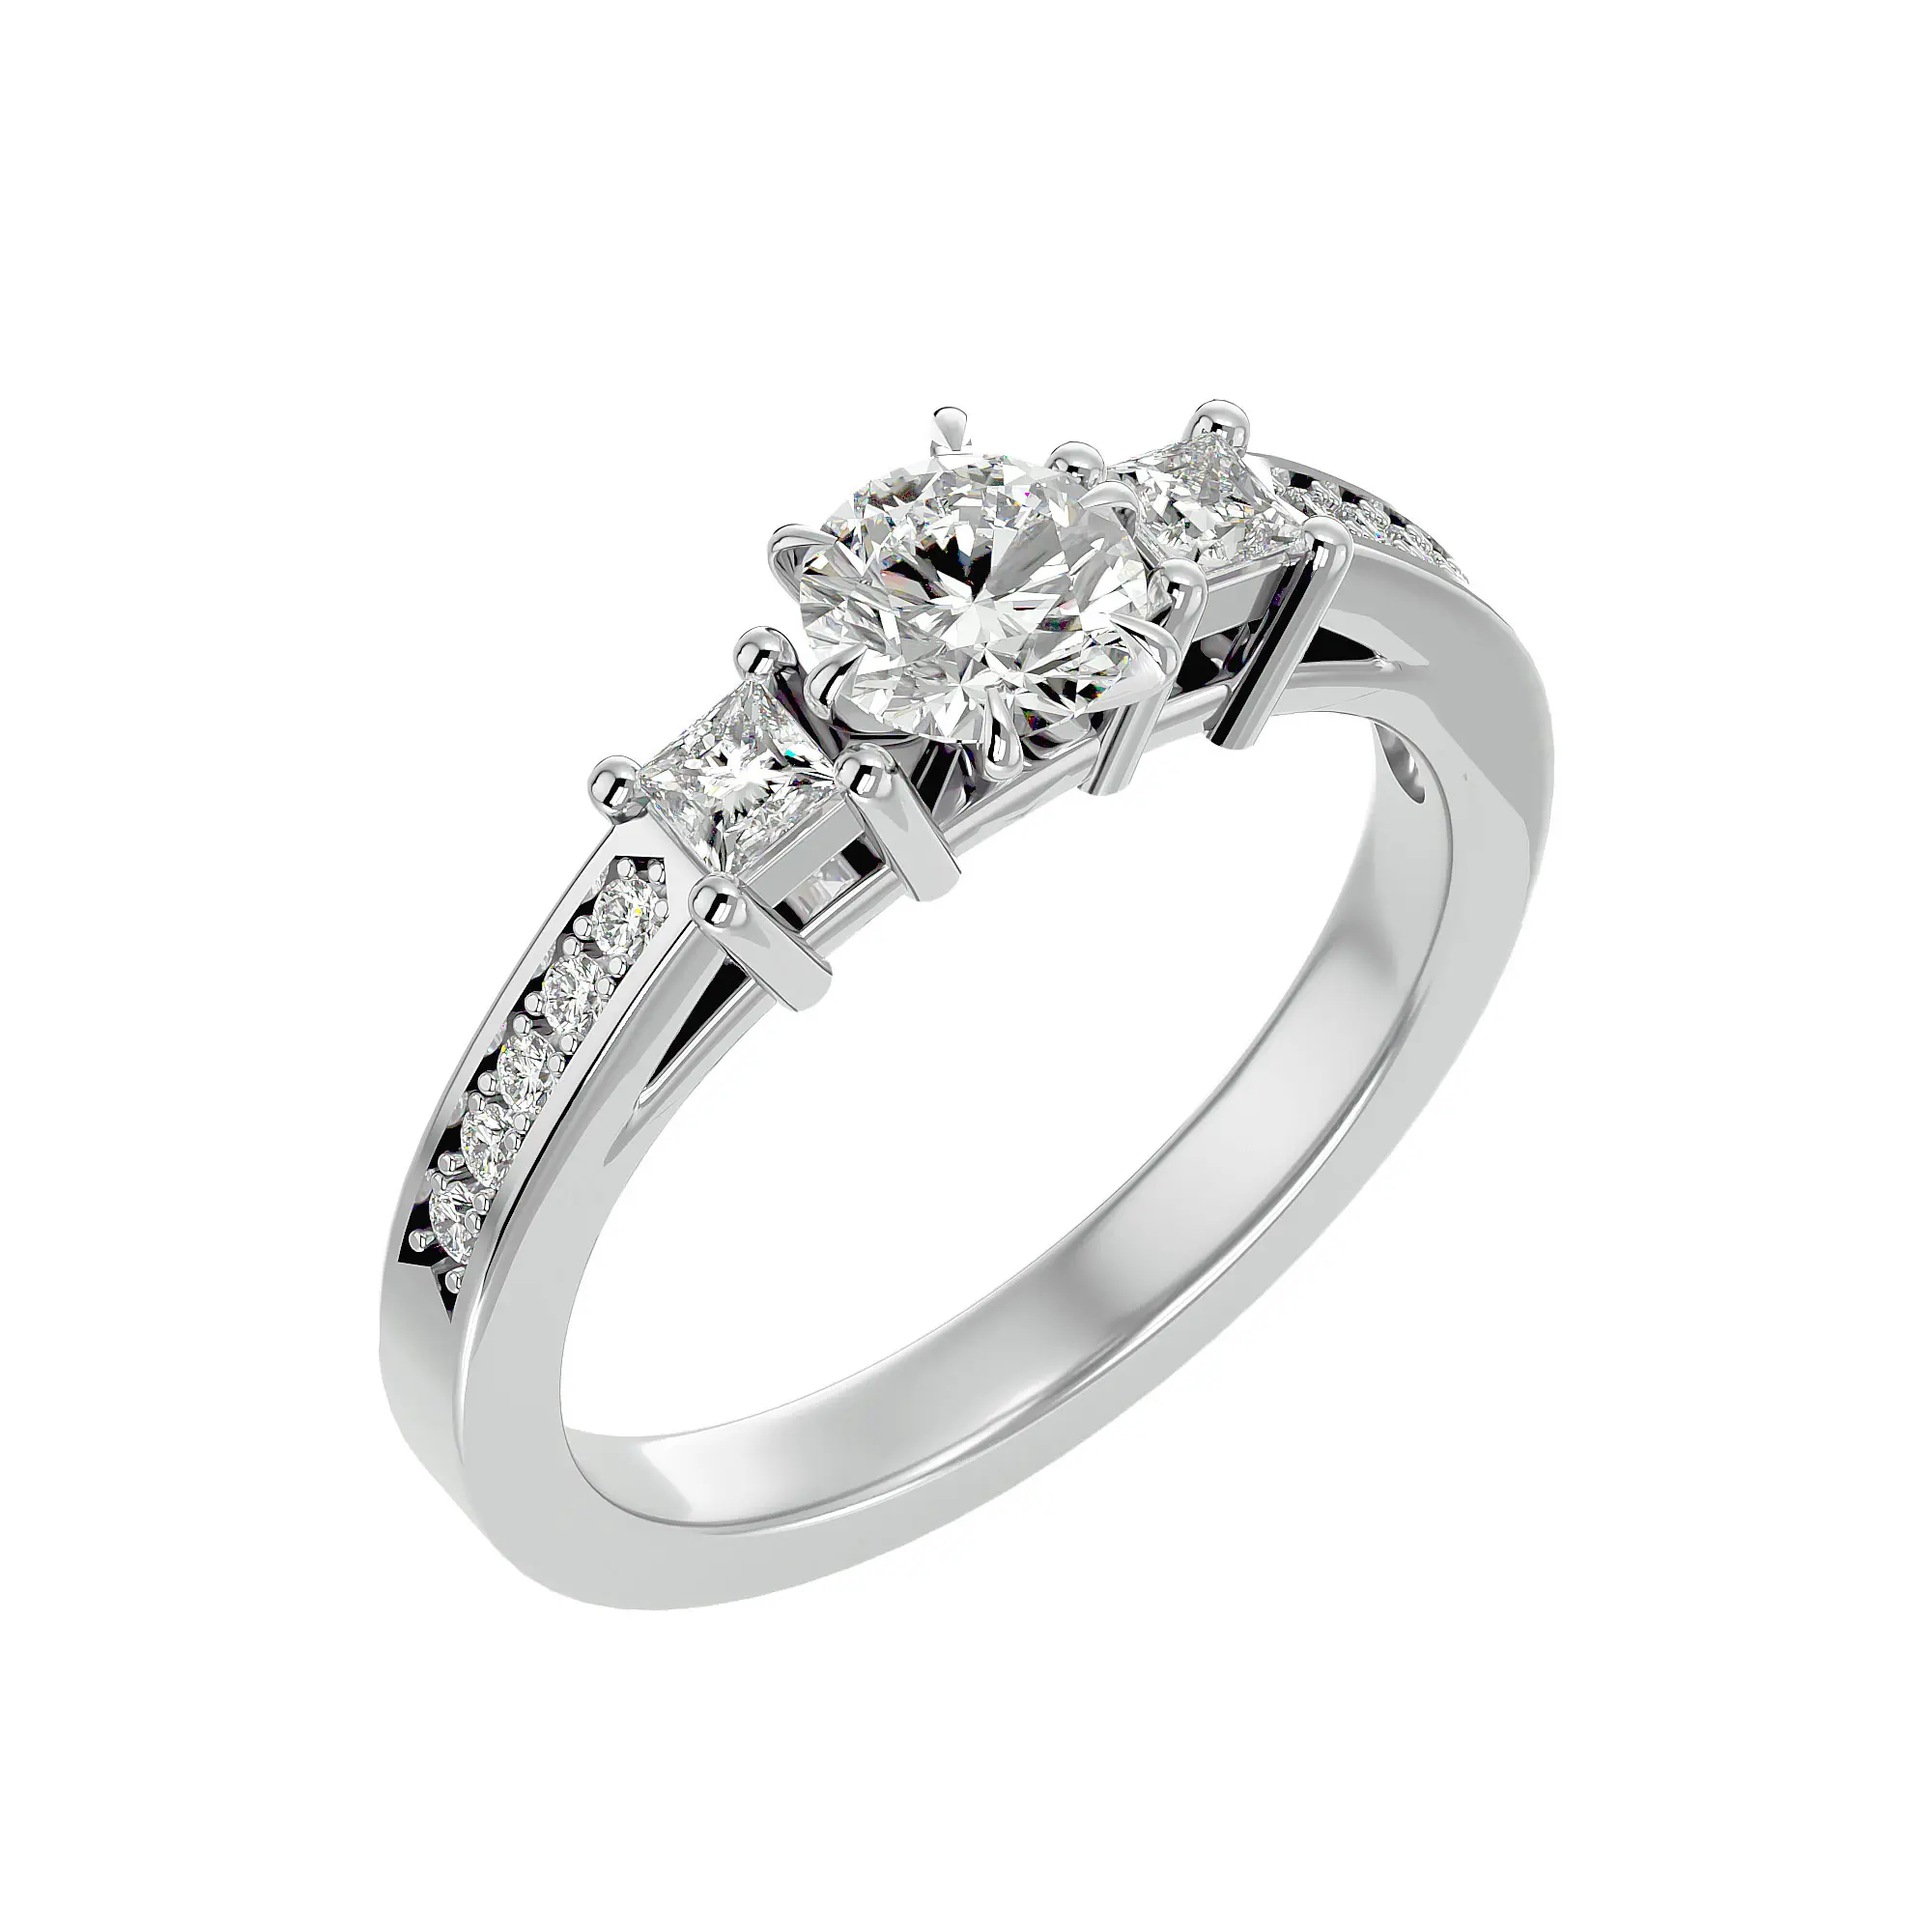 Unique, Vintage Inspired Design, Emerald Cut Engagement Ring + Wedding